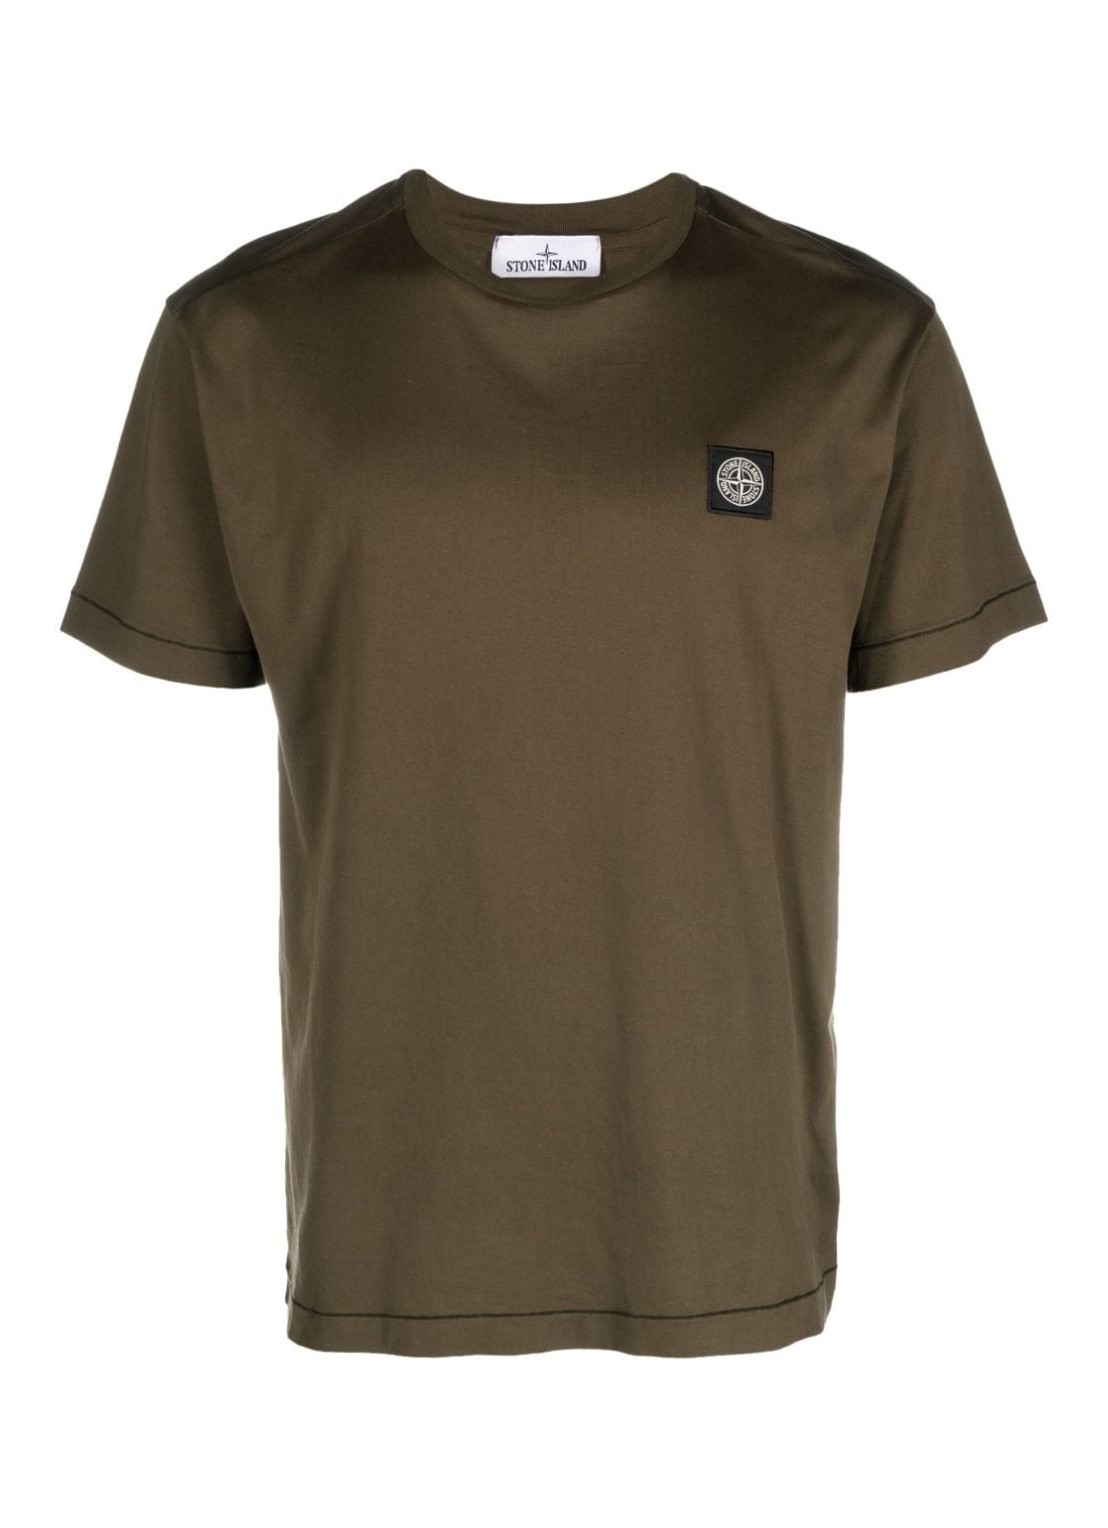 Camiseta stone island t-shirt man t shirt 791524113 v0058 talla XL
 